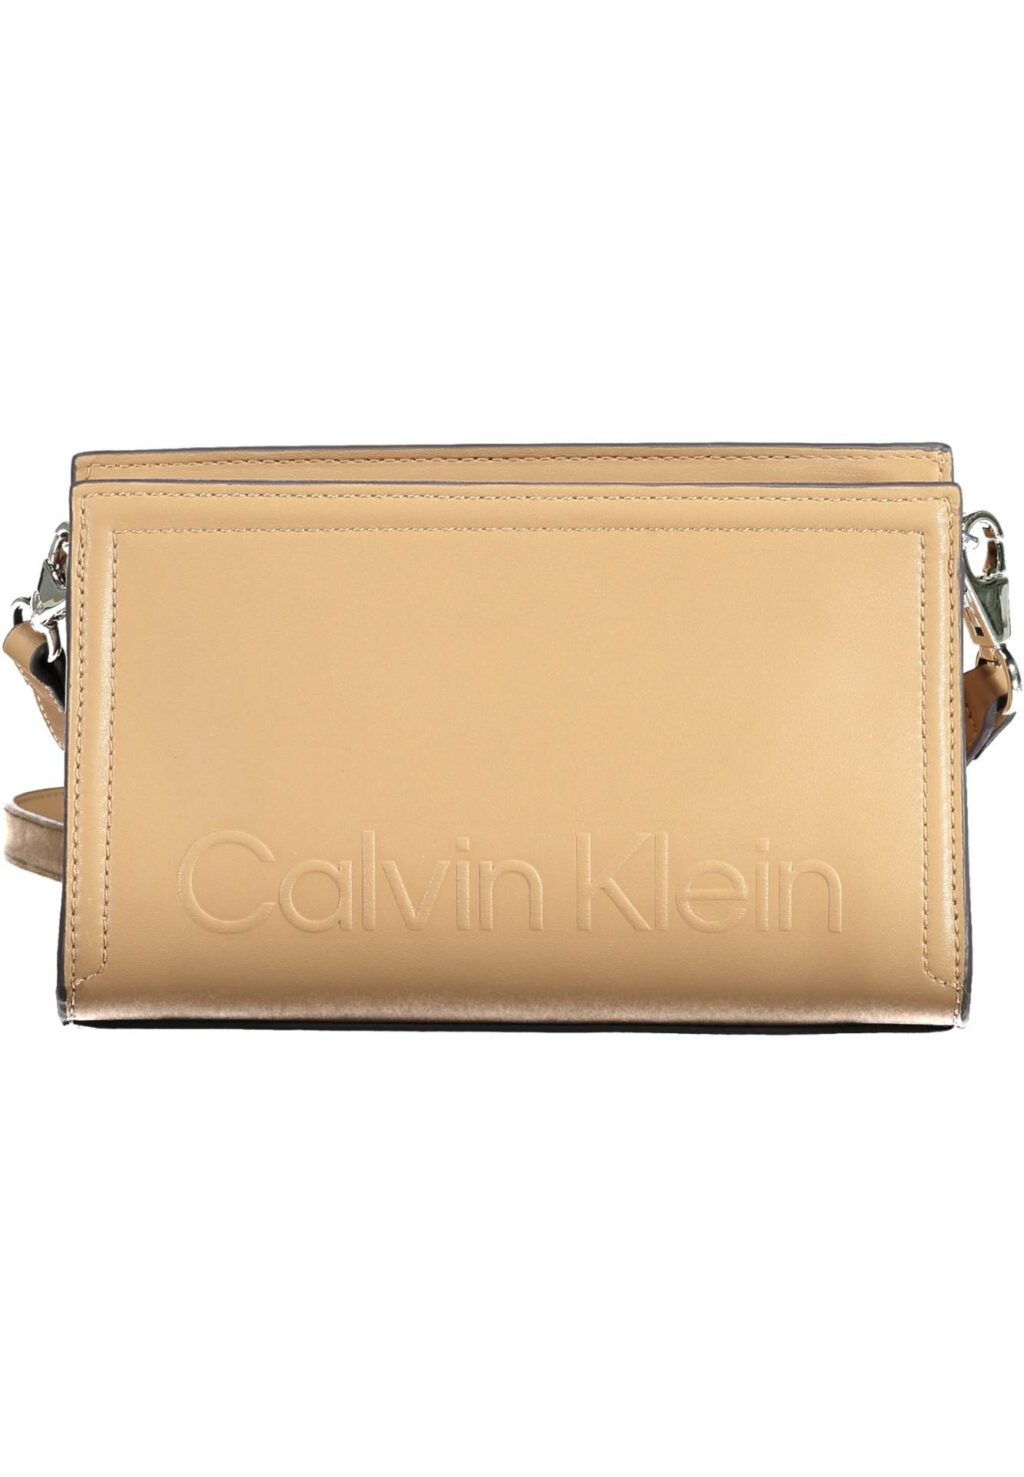 CALVIN KLEIN BROWN WOMEN'S BAG K60K609846_MARRONE_RBC